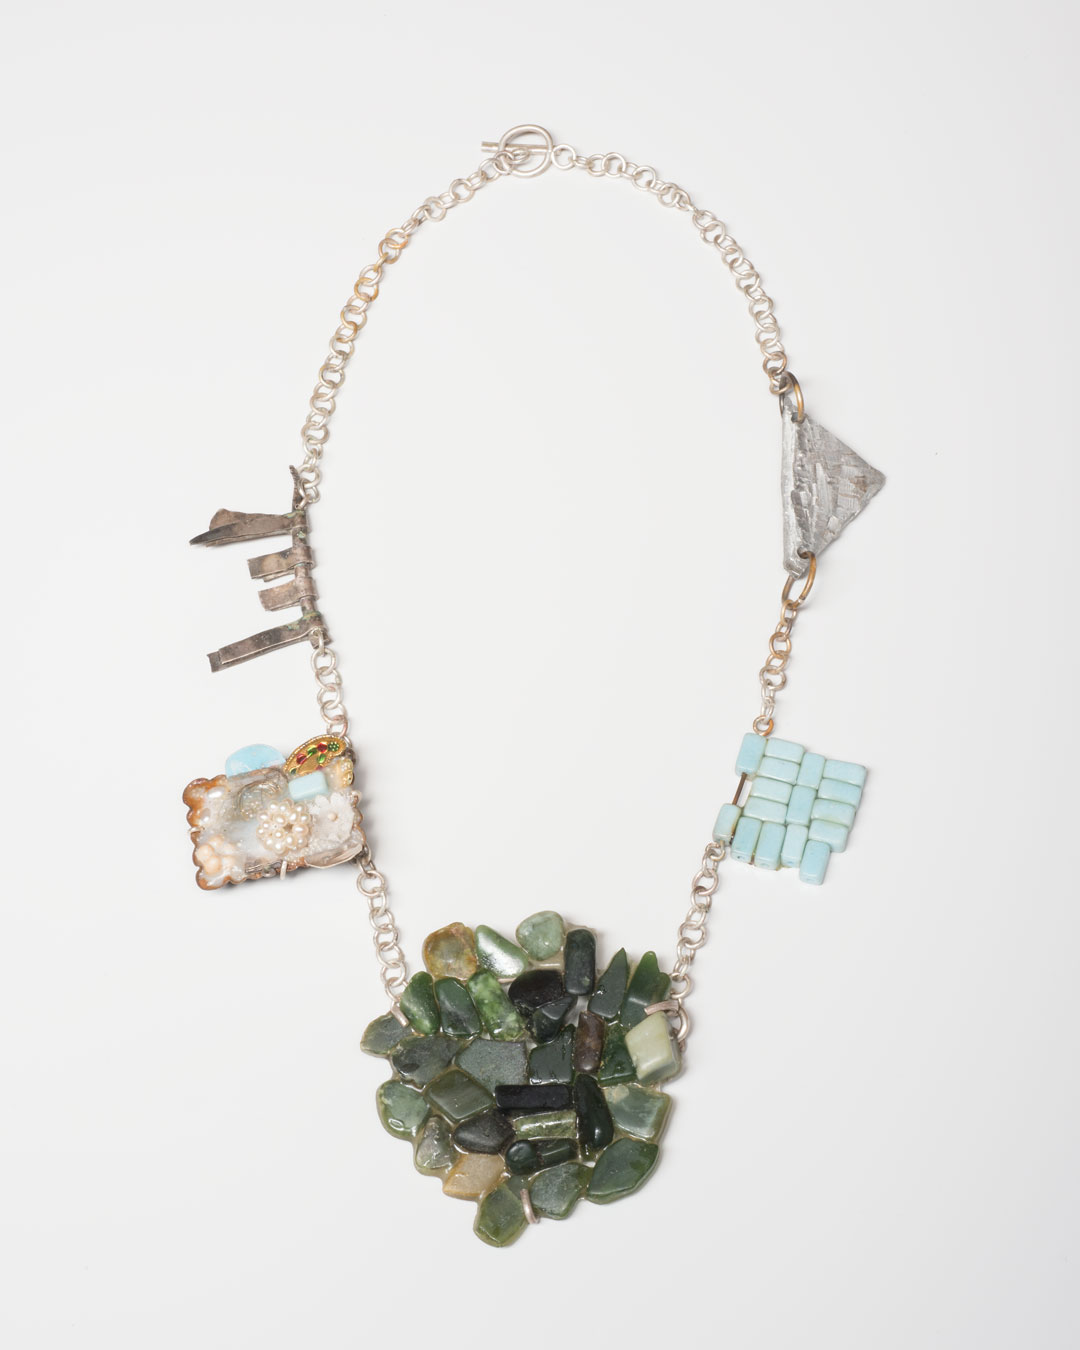 Lisa Walker, untitled, 1998-2020, necklace; silver, plastic, glue, photograph, ceramic, pounamu (New Zealand jade), aluminium, €4360